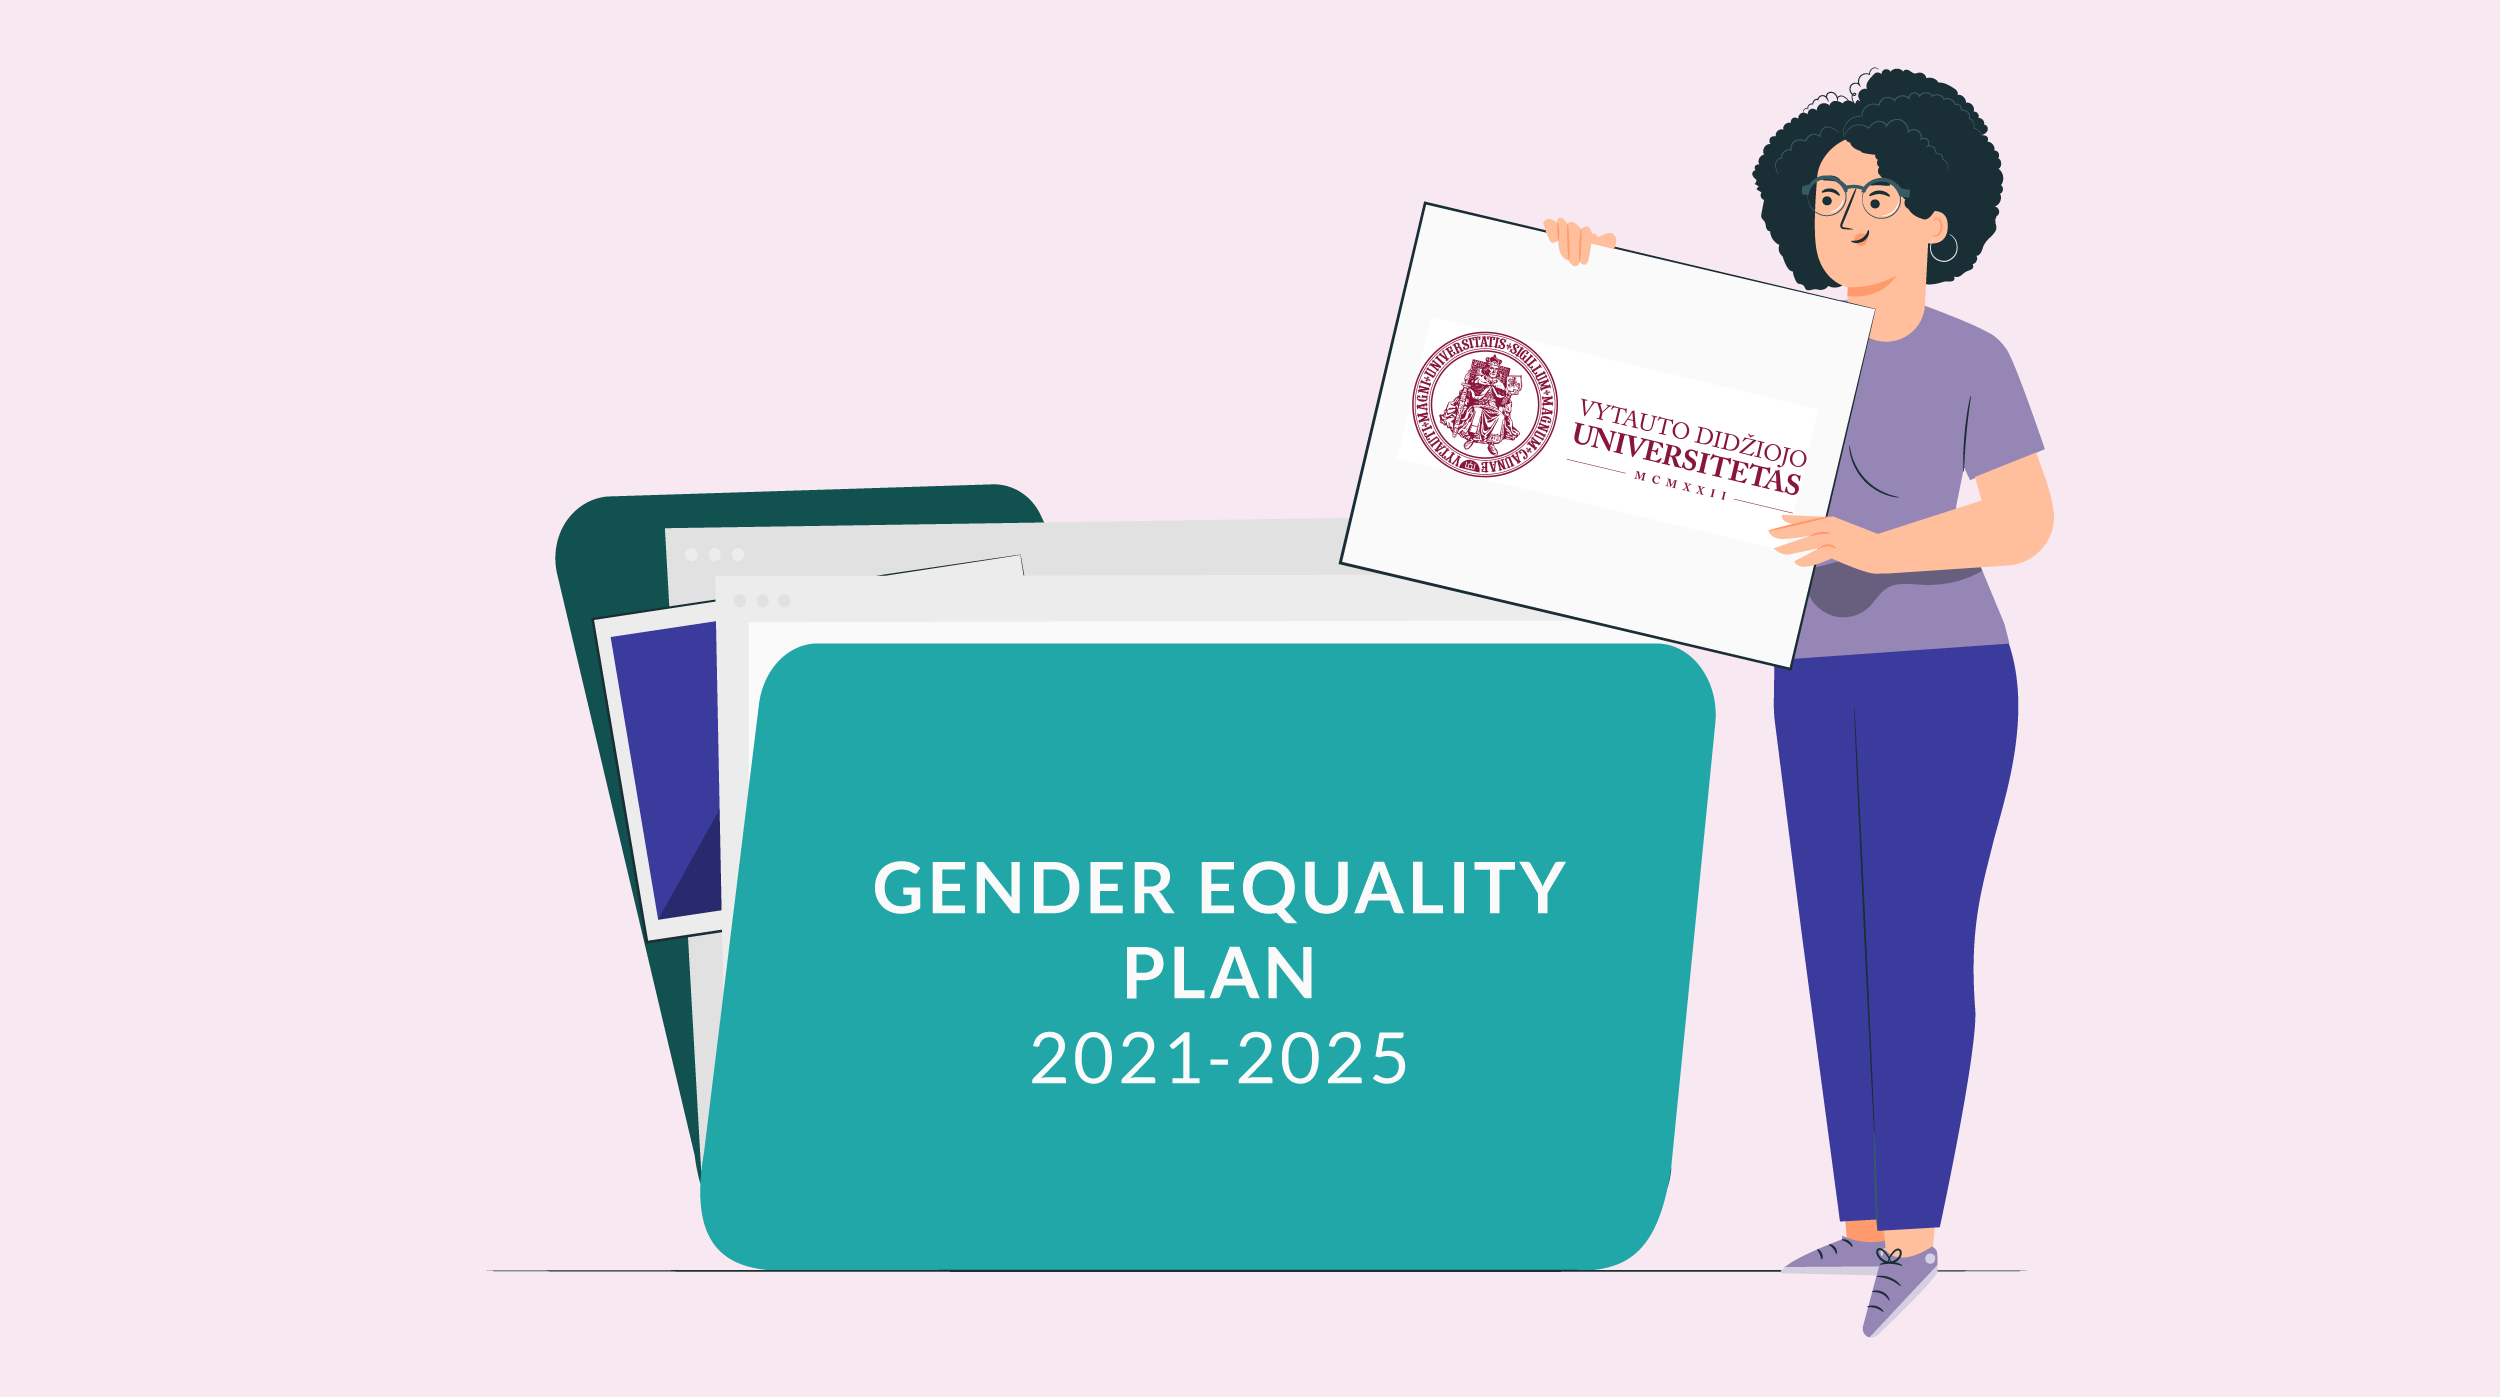 Press Release: Vytautas Magnus University adopted its Gender Equality Plan 2021-2025